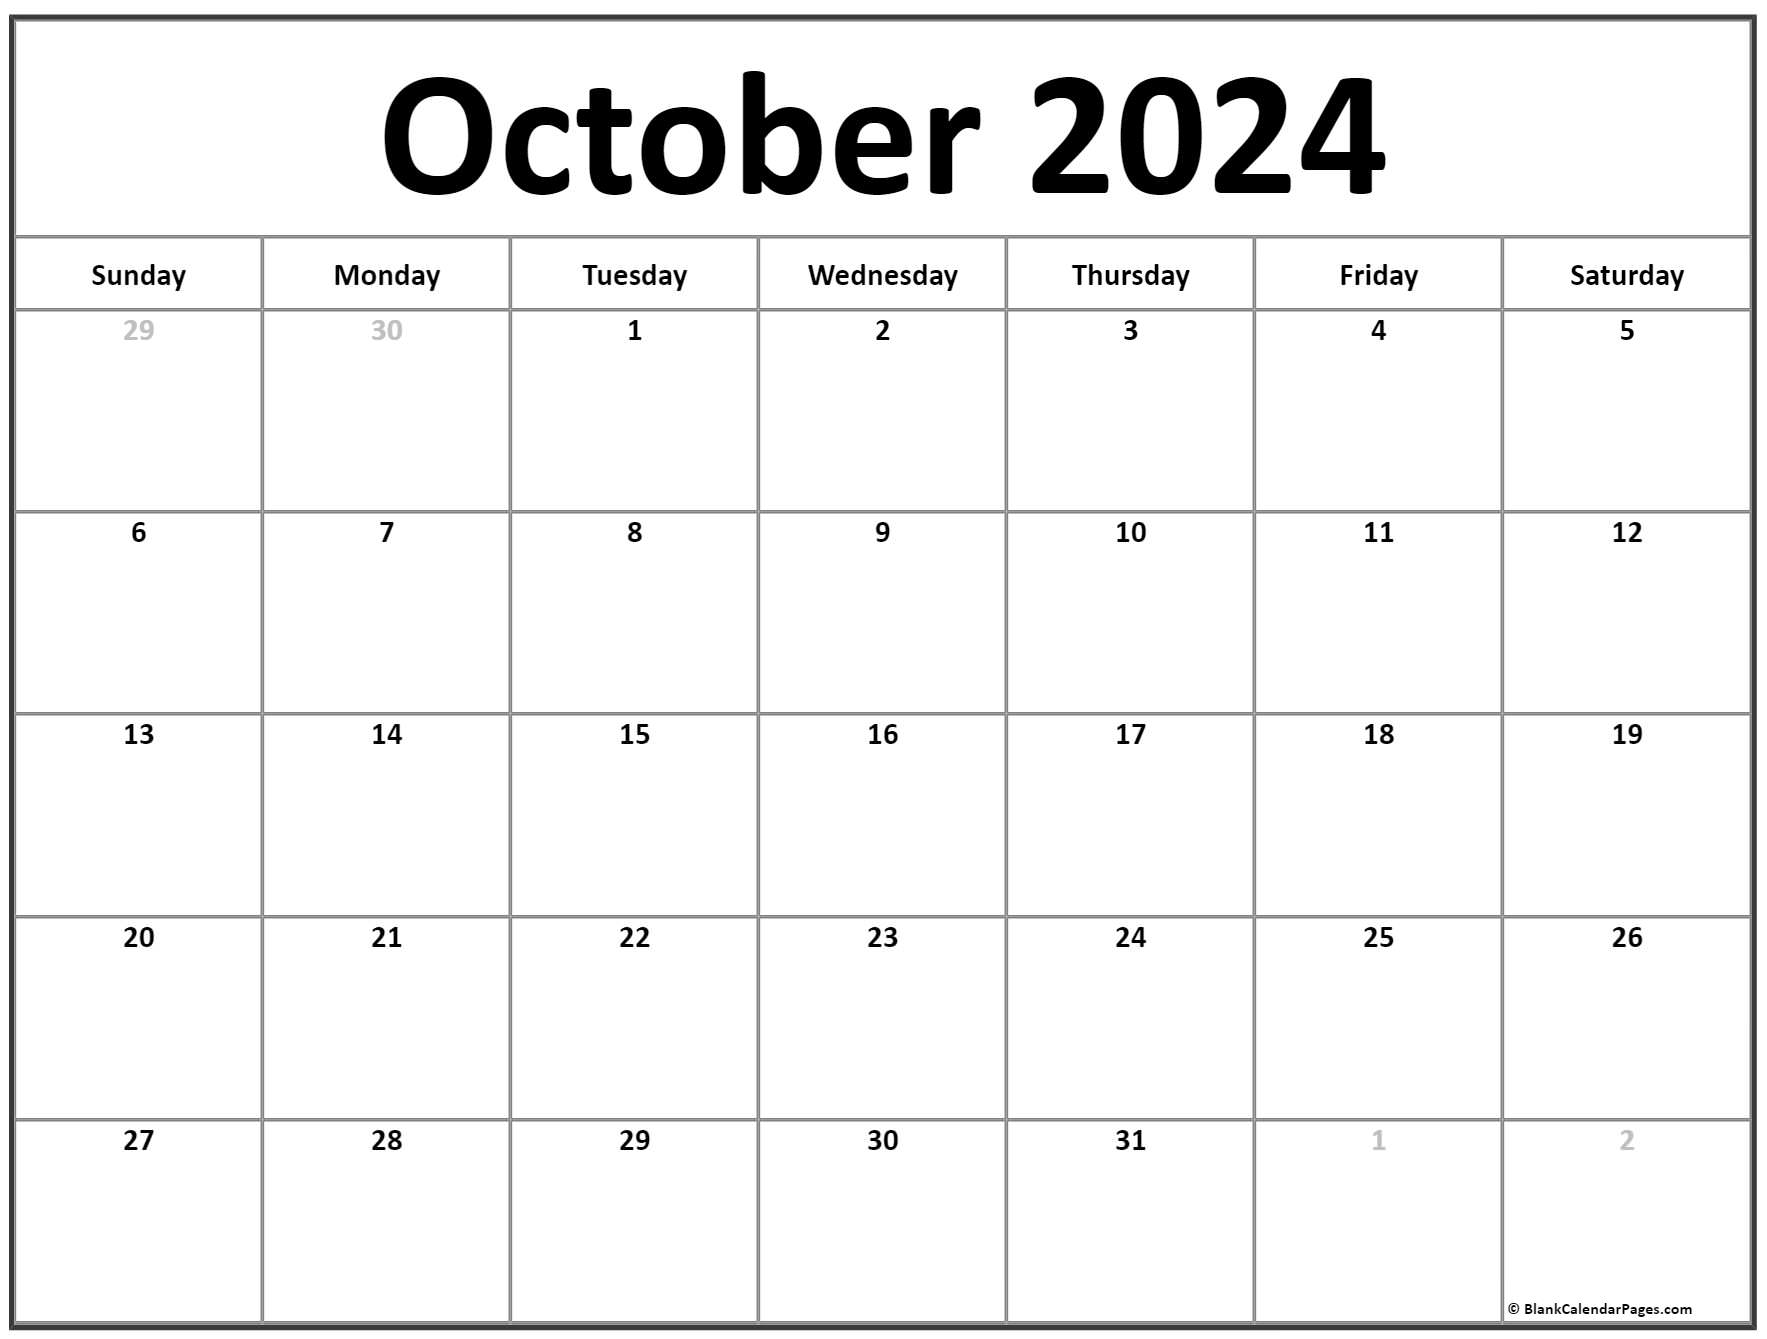 October 2021 calendar | free printable monthly calendars